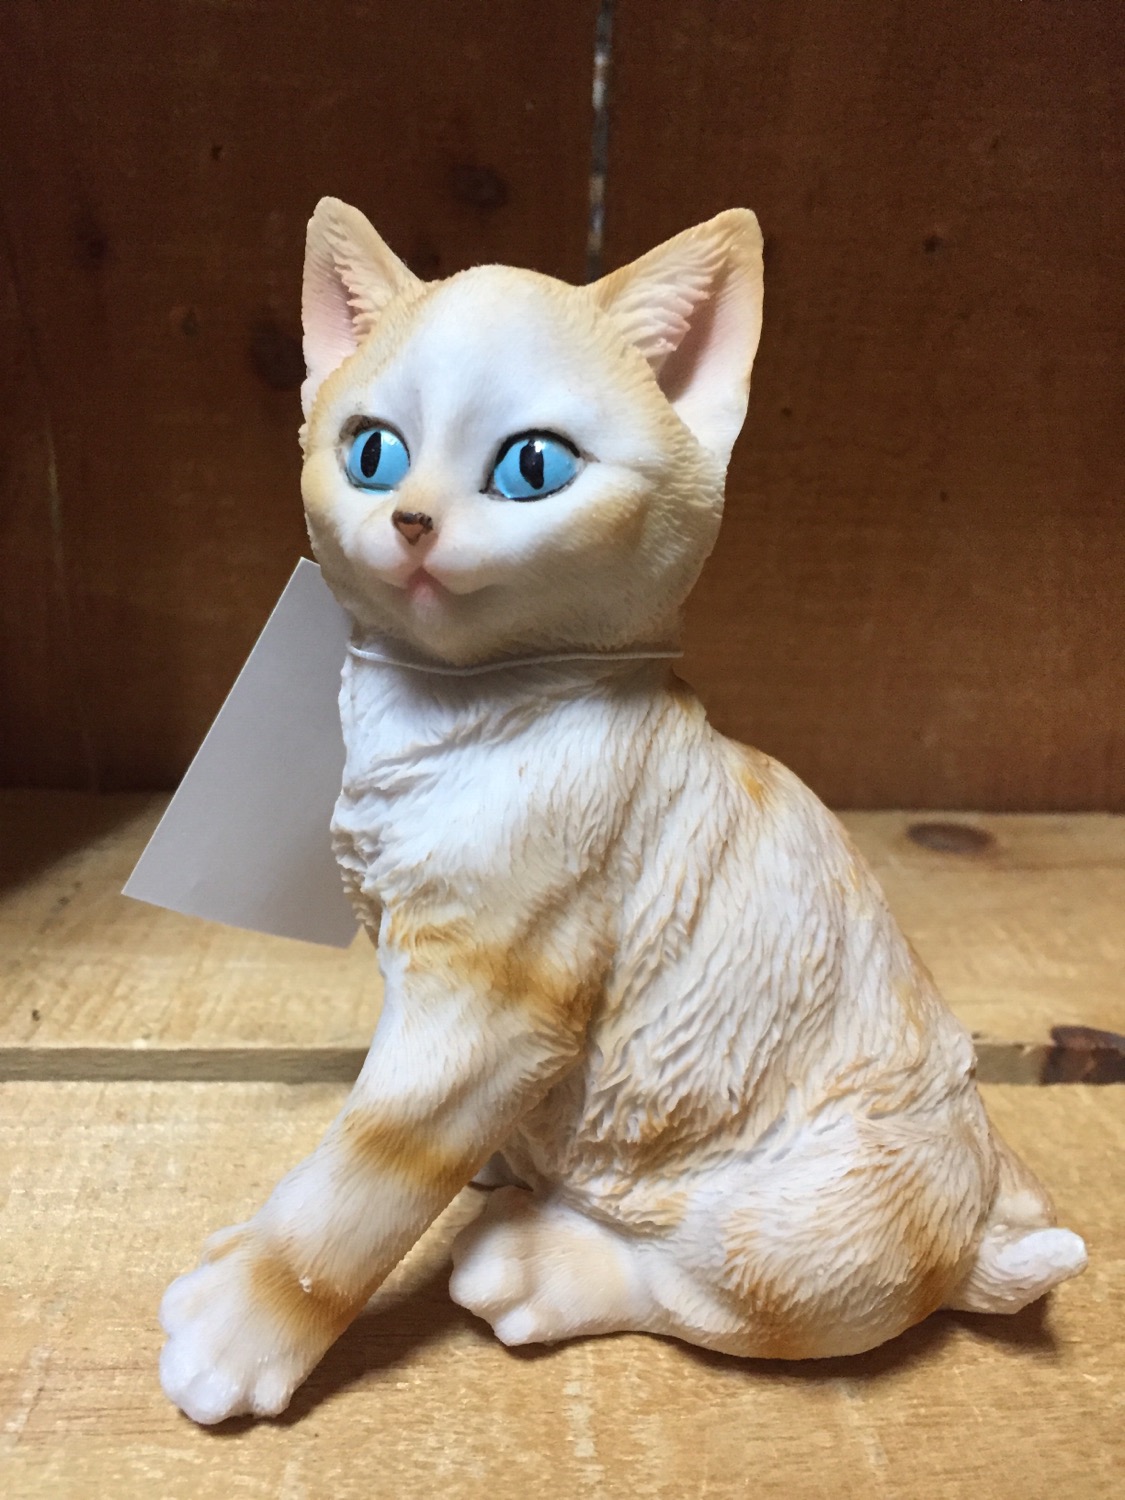 Orange and White Kitten Figurine - 5” x 4.5” x 3.5”